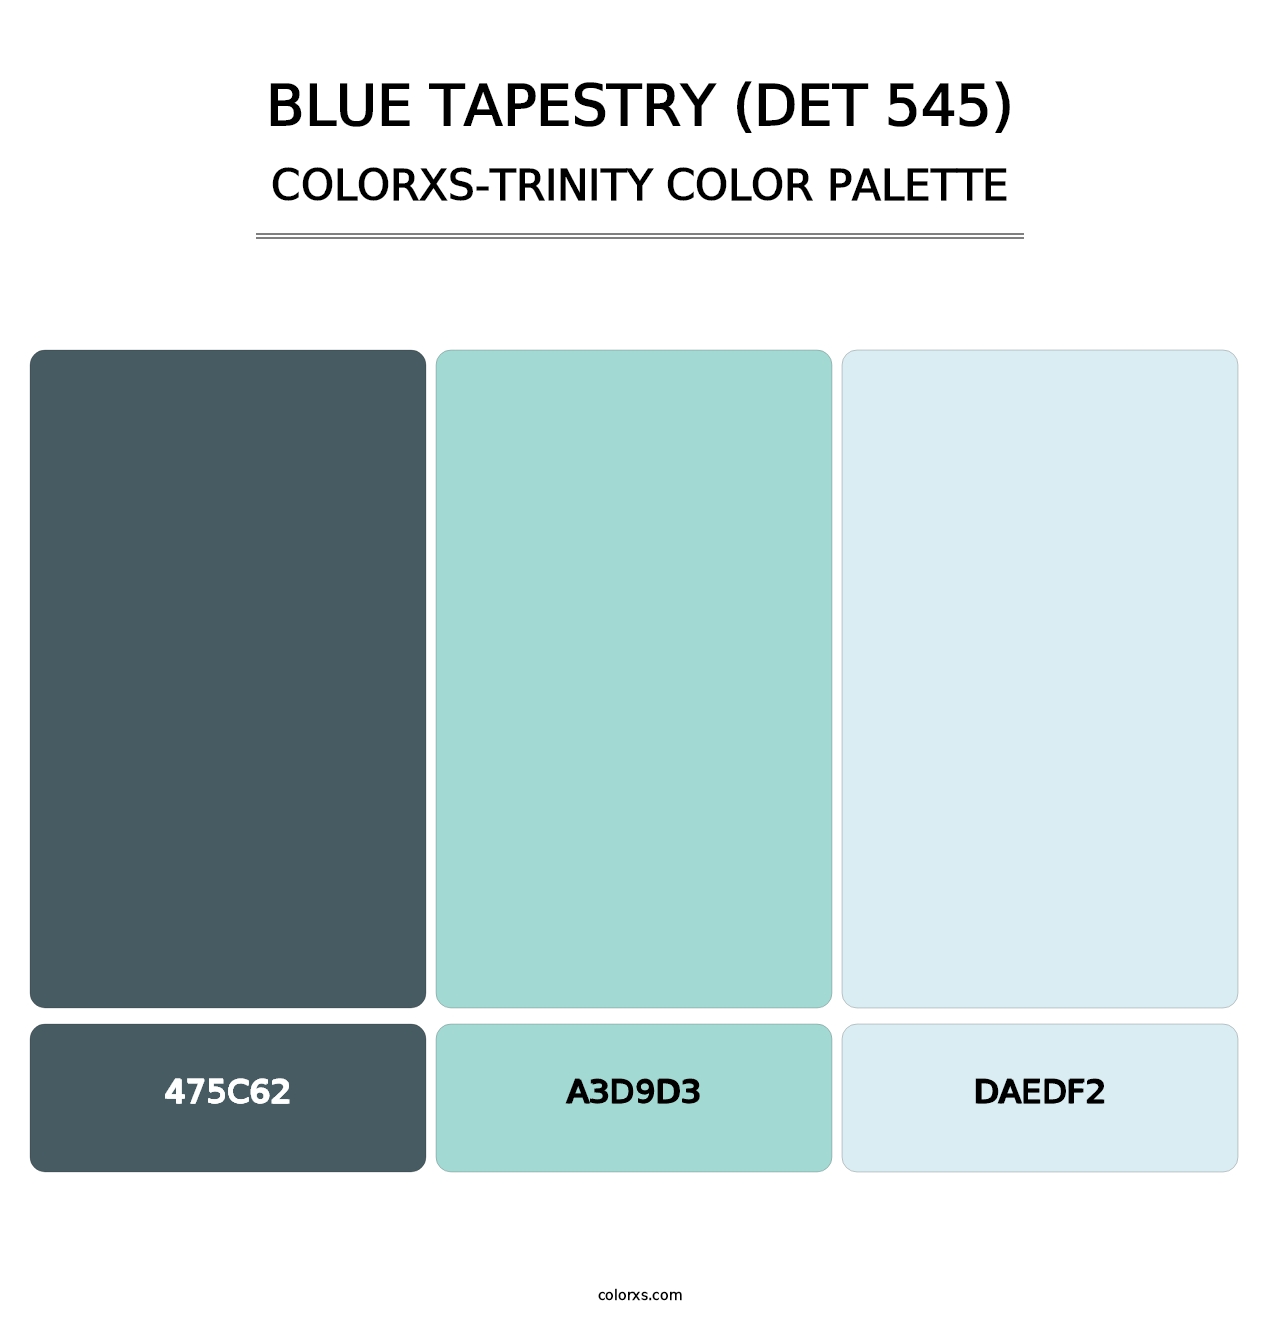 Blue Tapestry (DET 545) - Colorxs Trinity Palette